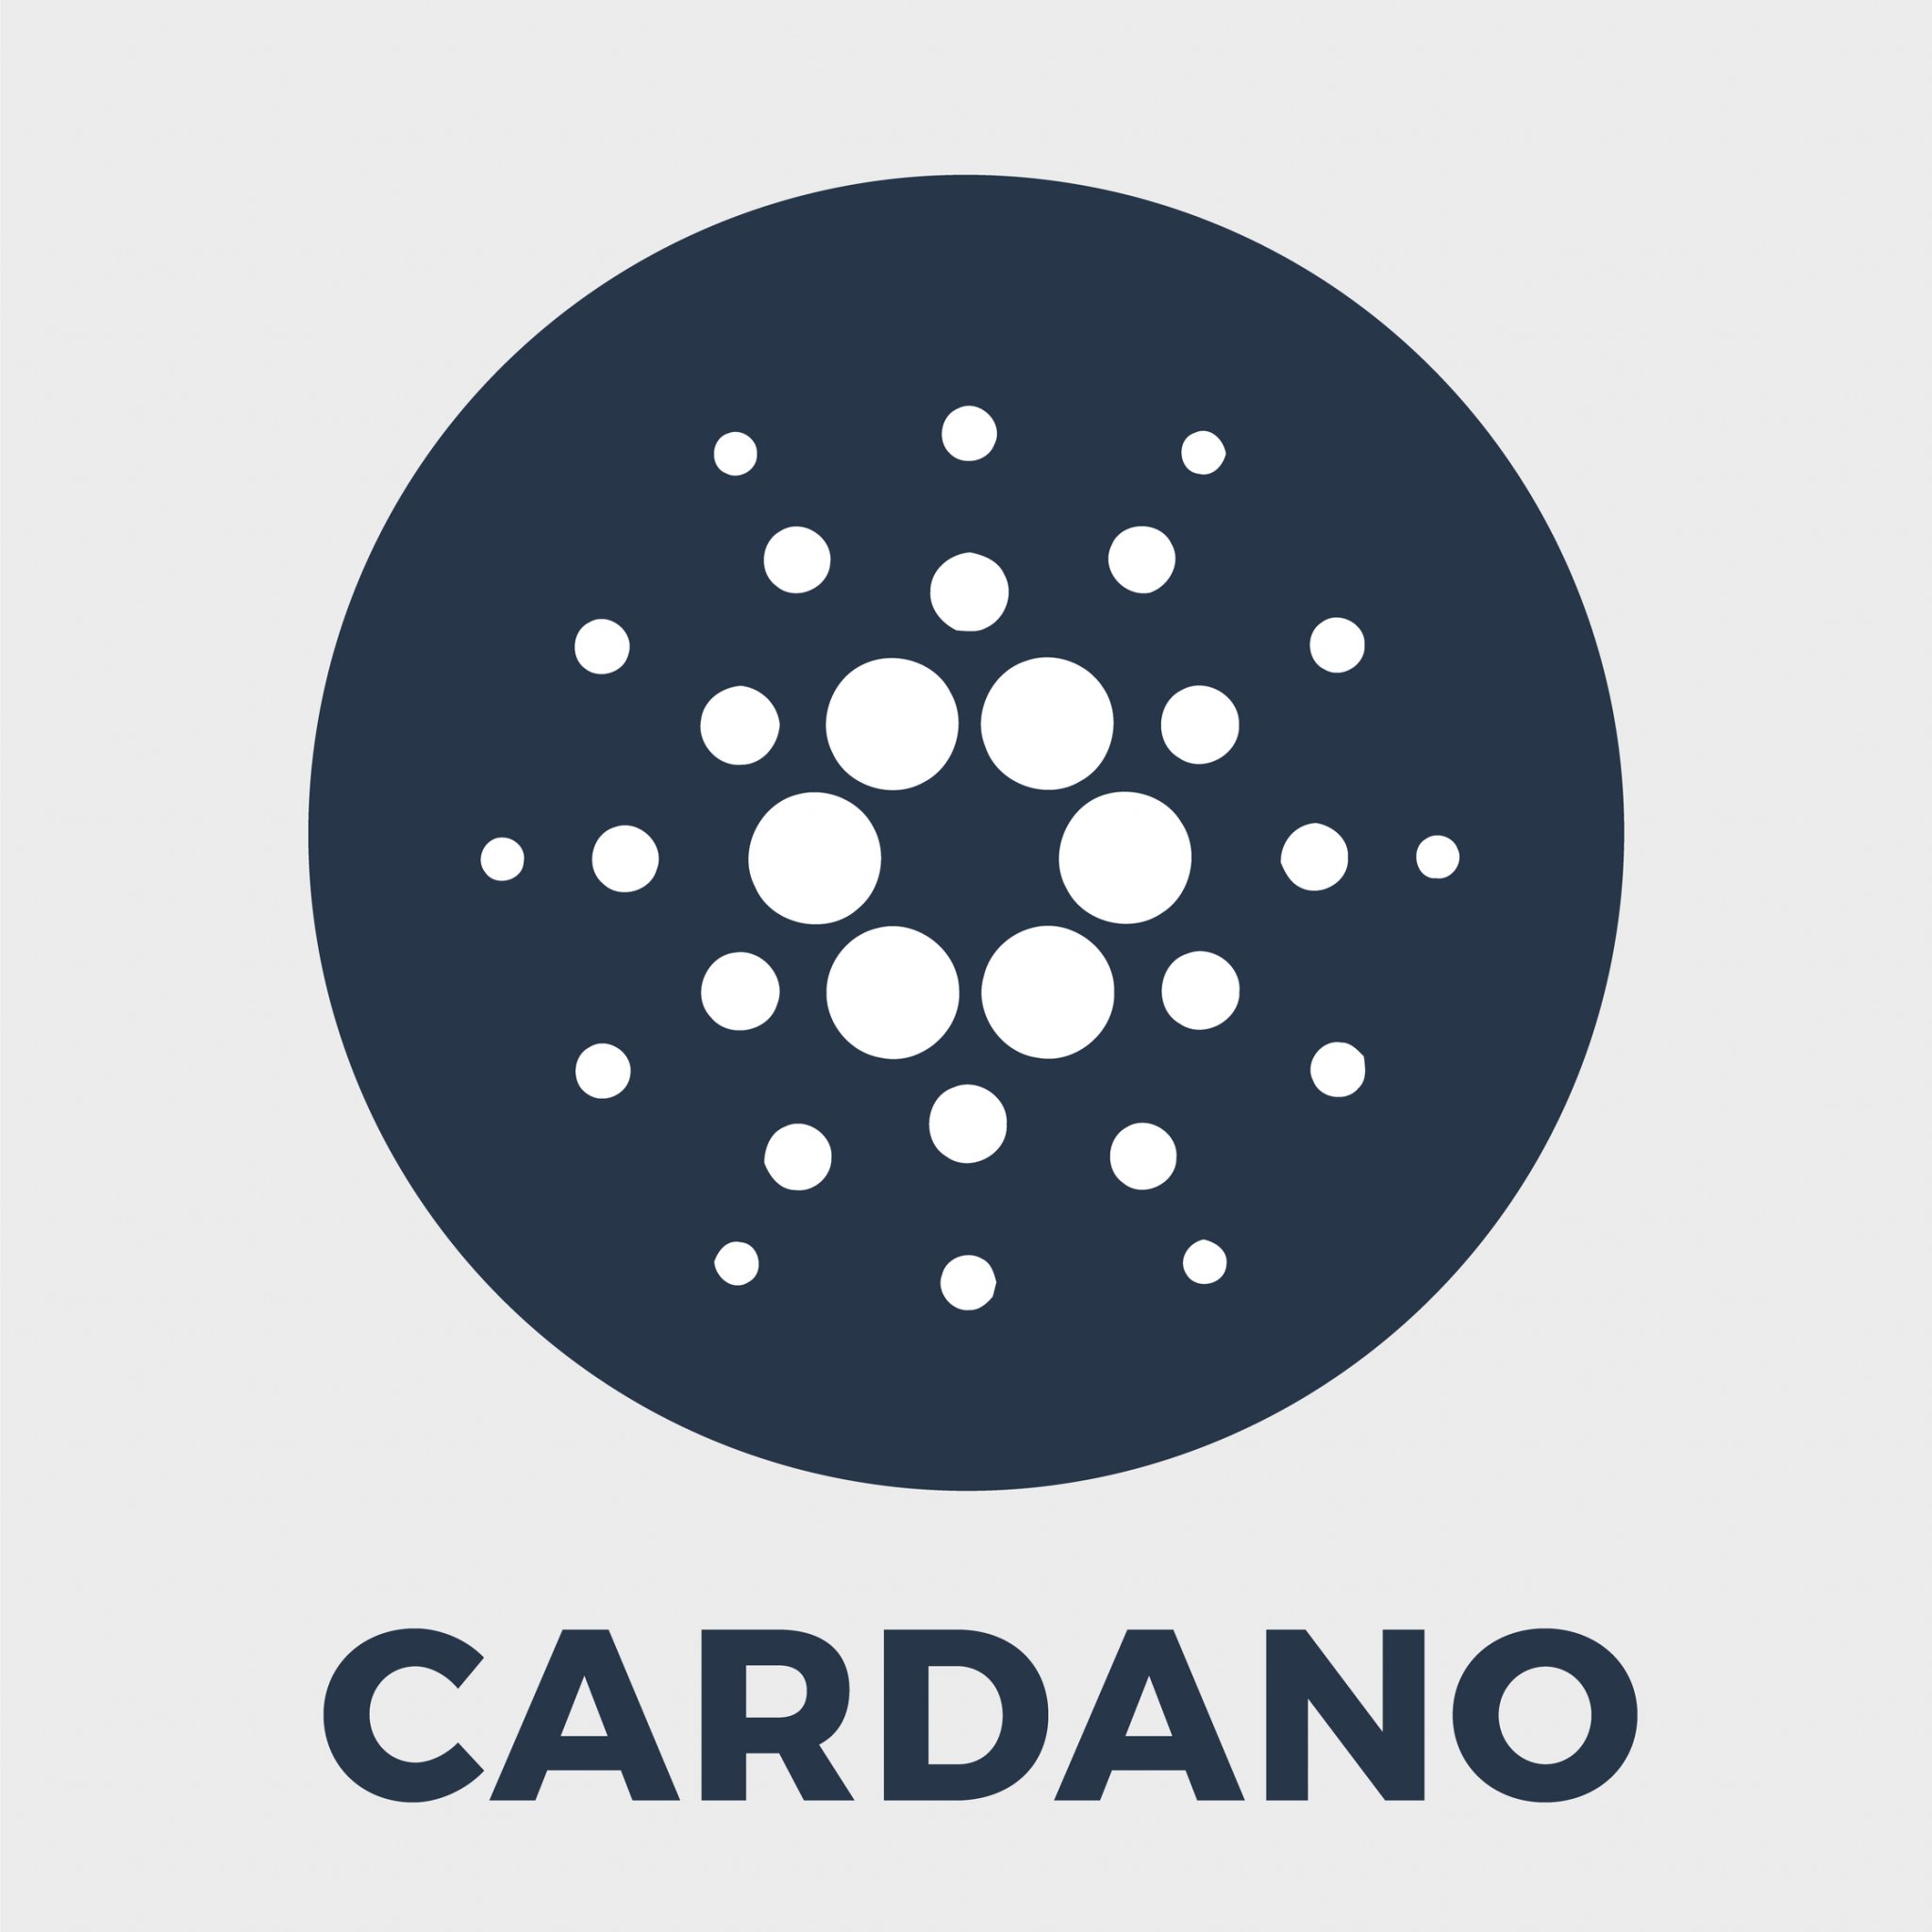 Cardano - Offline cryptocurrency use soon ...